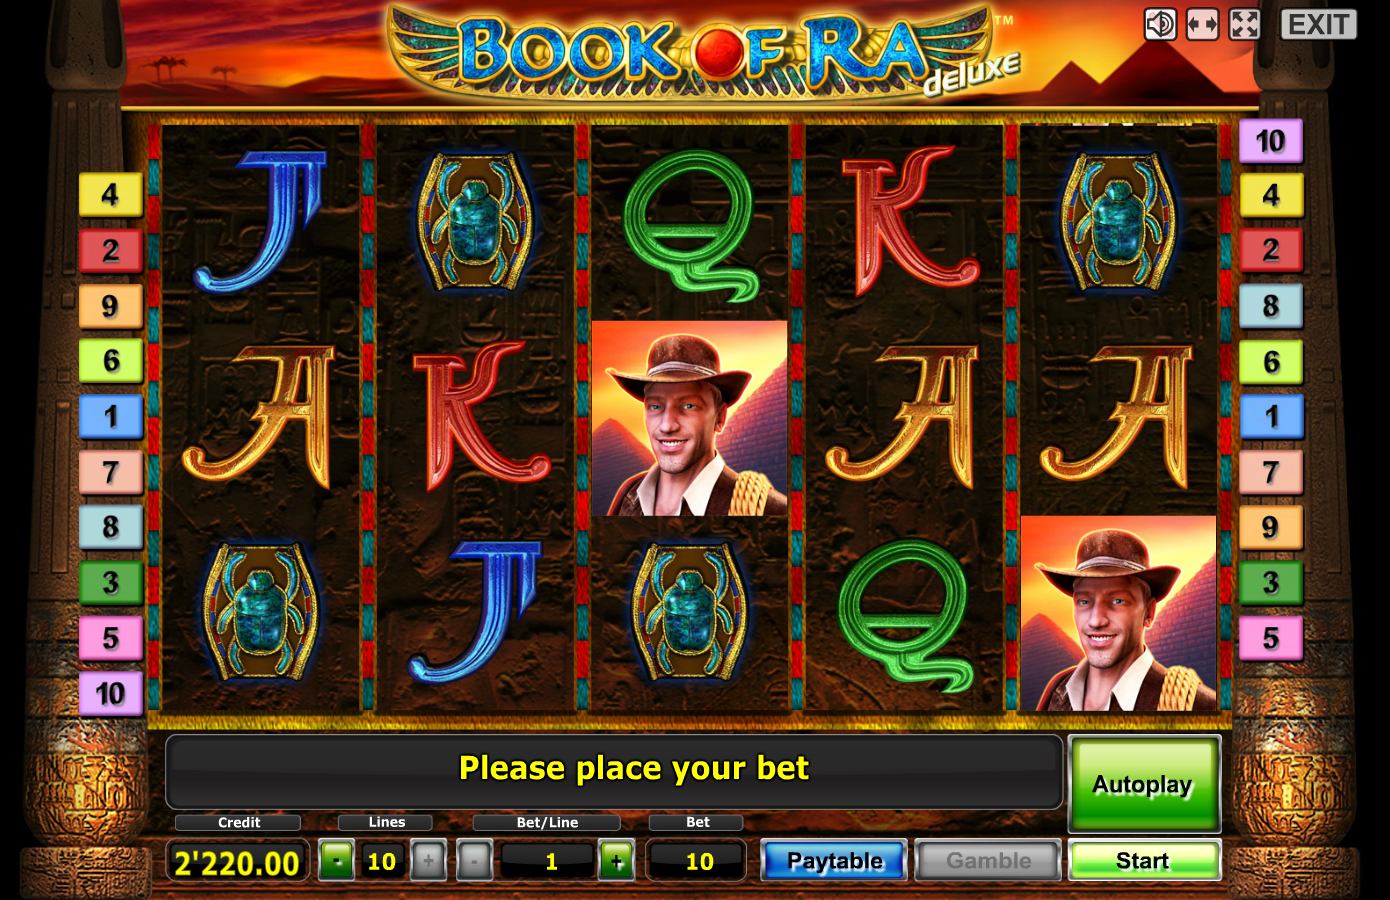 Book of ra slot machine free online play